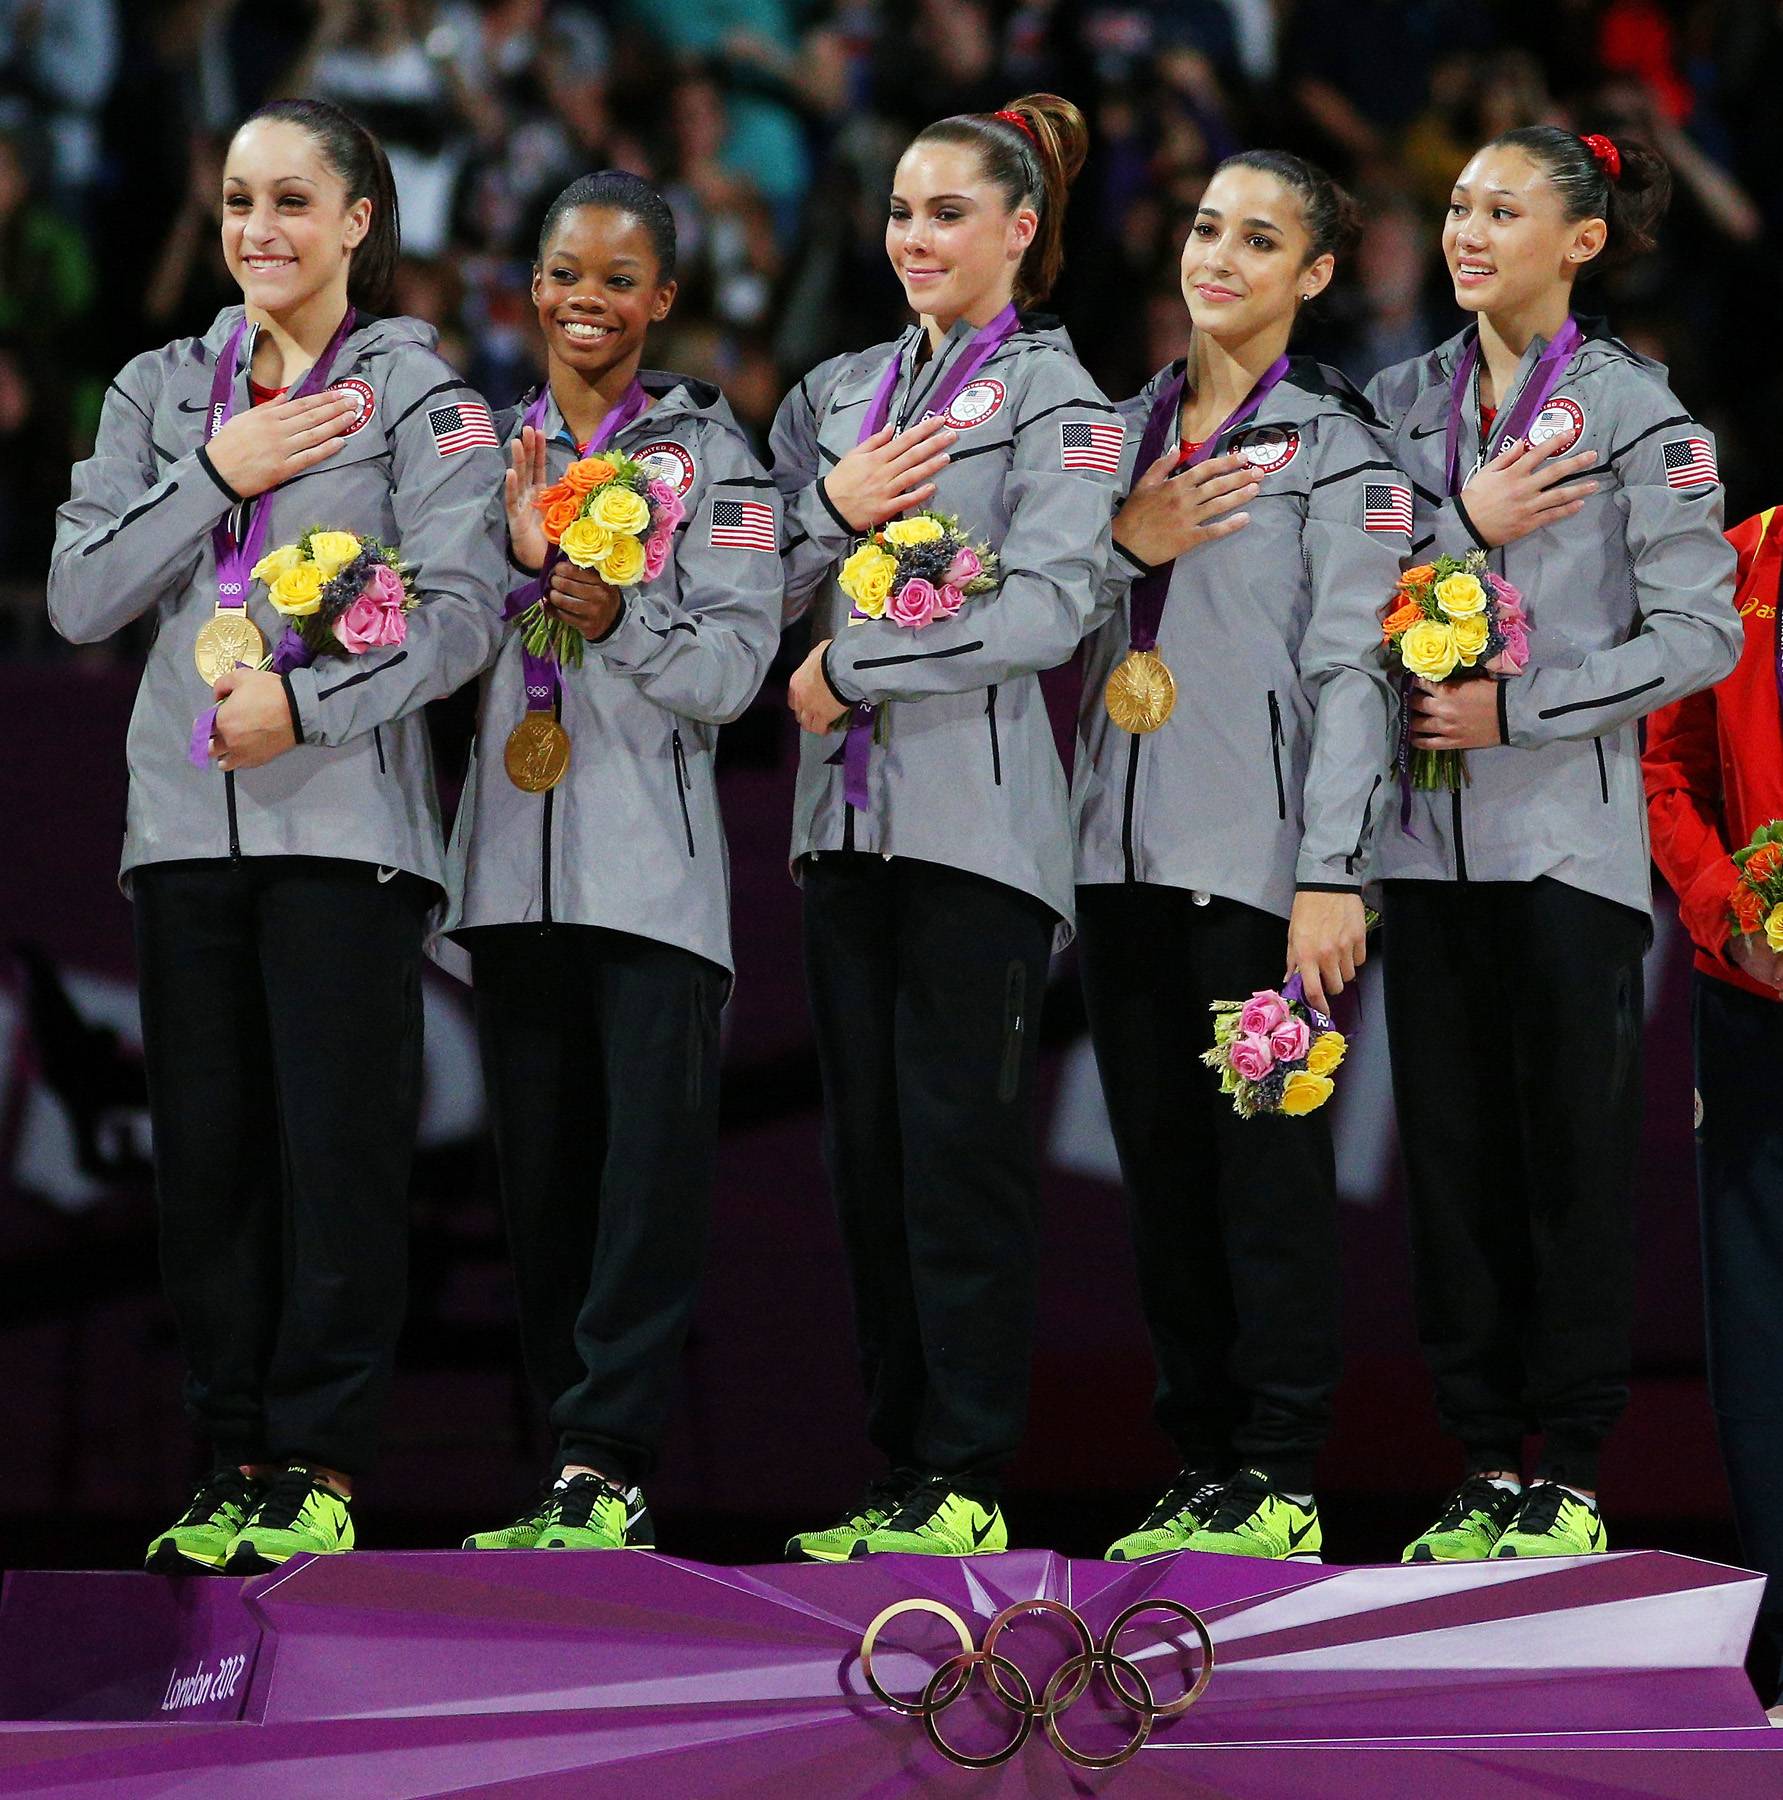 U.S. women's team gymnastics wins gold medal